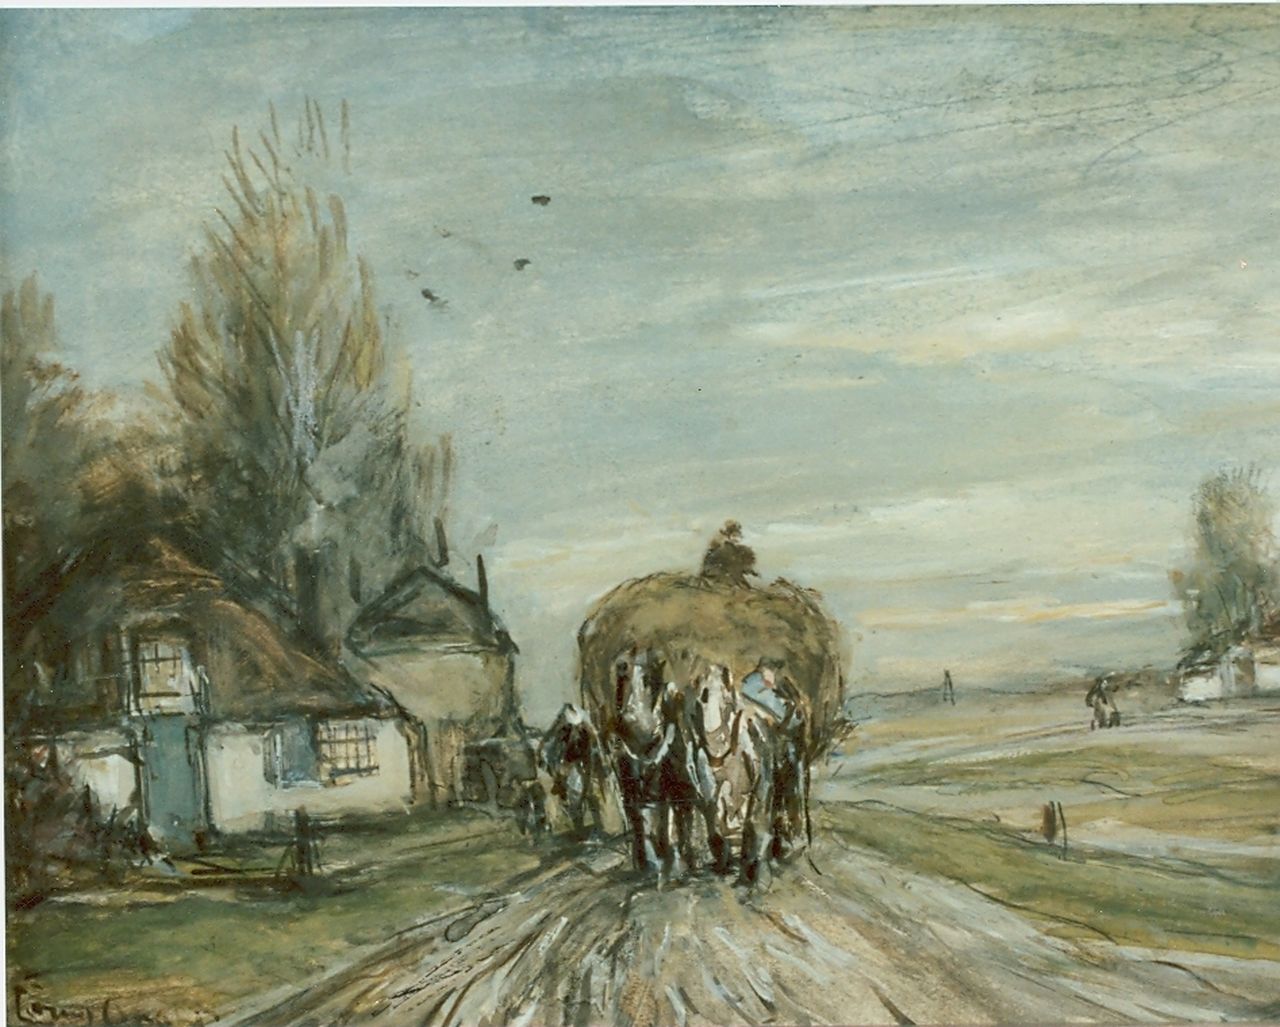 Apol L.F.H.  | Lodewijk Franciscus Hendrik 'Louis' Apol, Hooiwagen op landweg, aquarel op papier 15,5 x 19,5 cm, gesigneerd linksonder